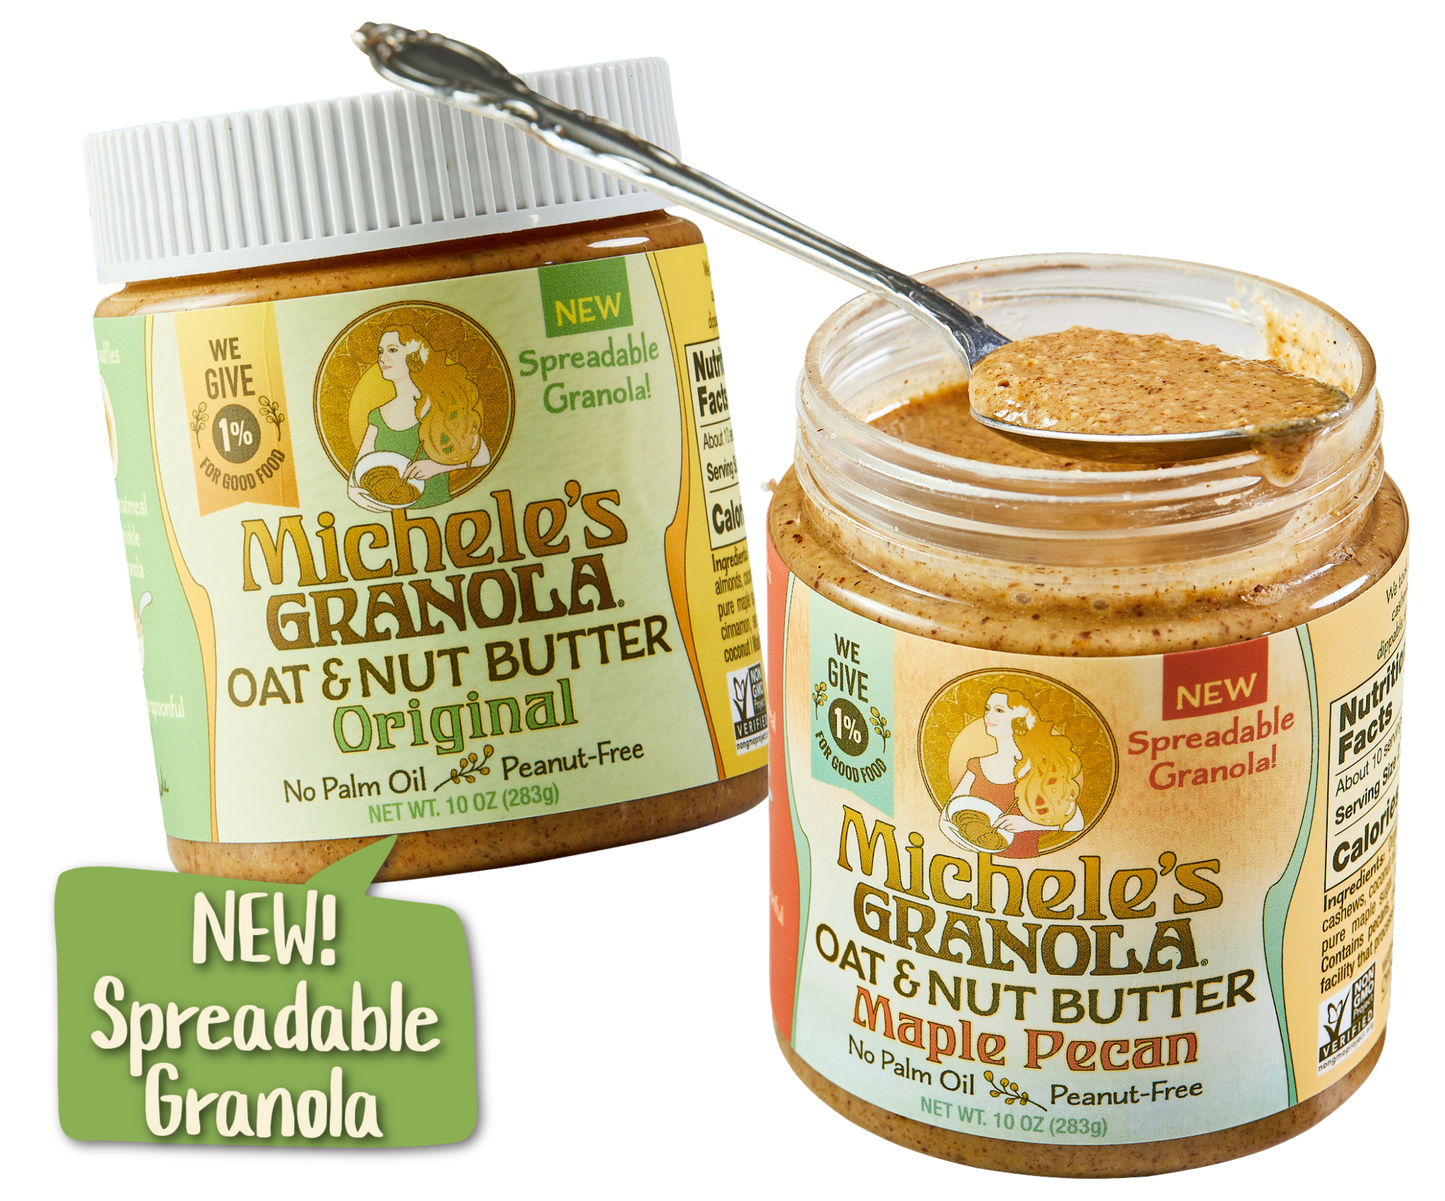 NEW! Spreadable Granola - Michele's Oat & Nut Butter - granola butter, vegan, gluten-free